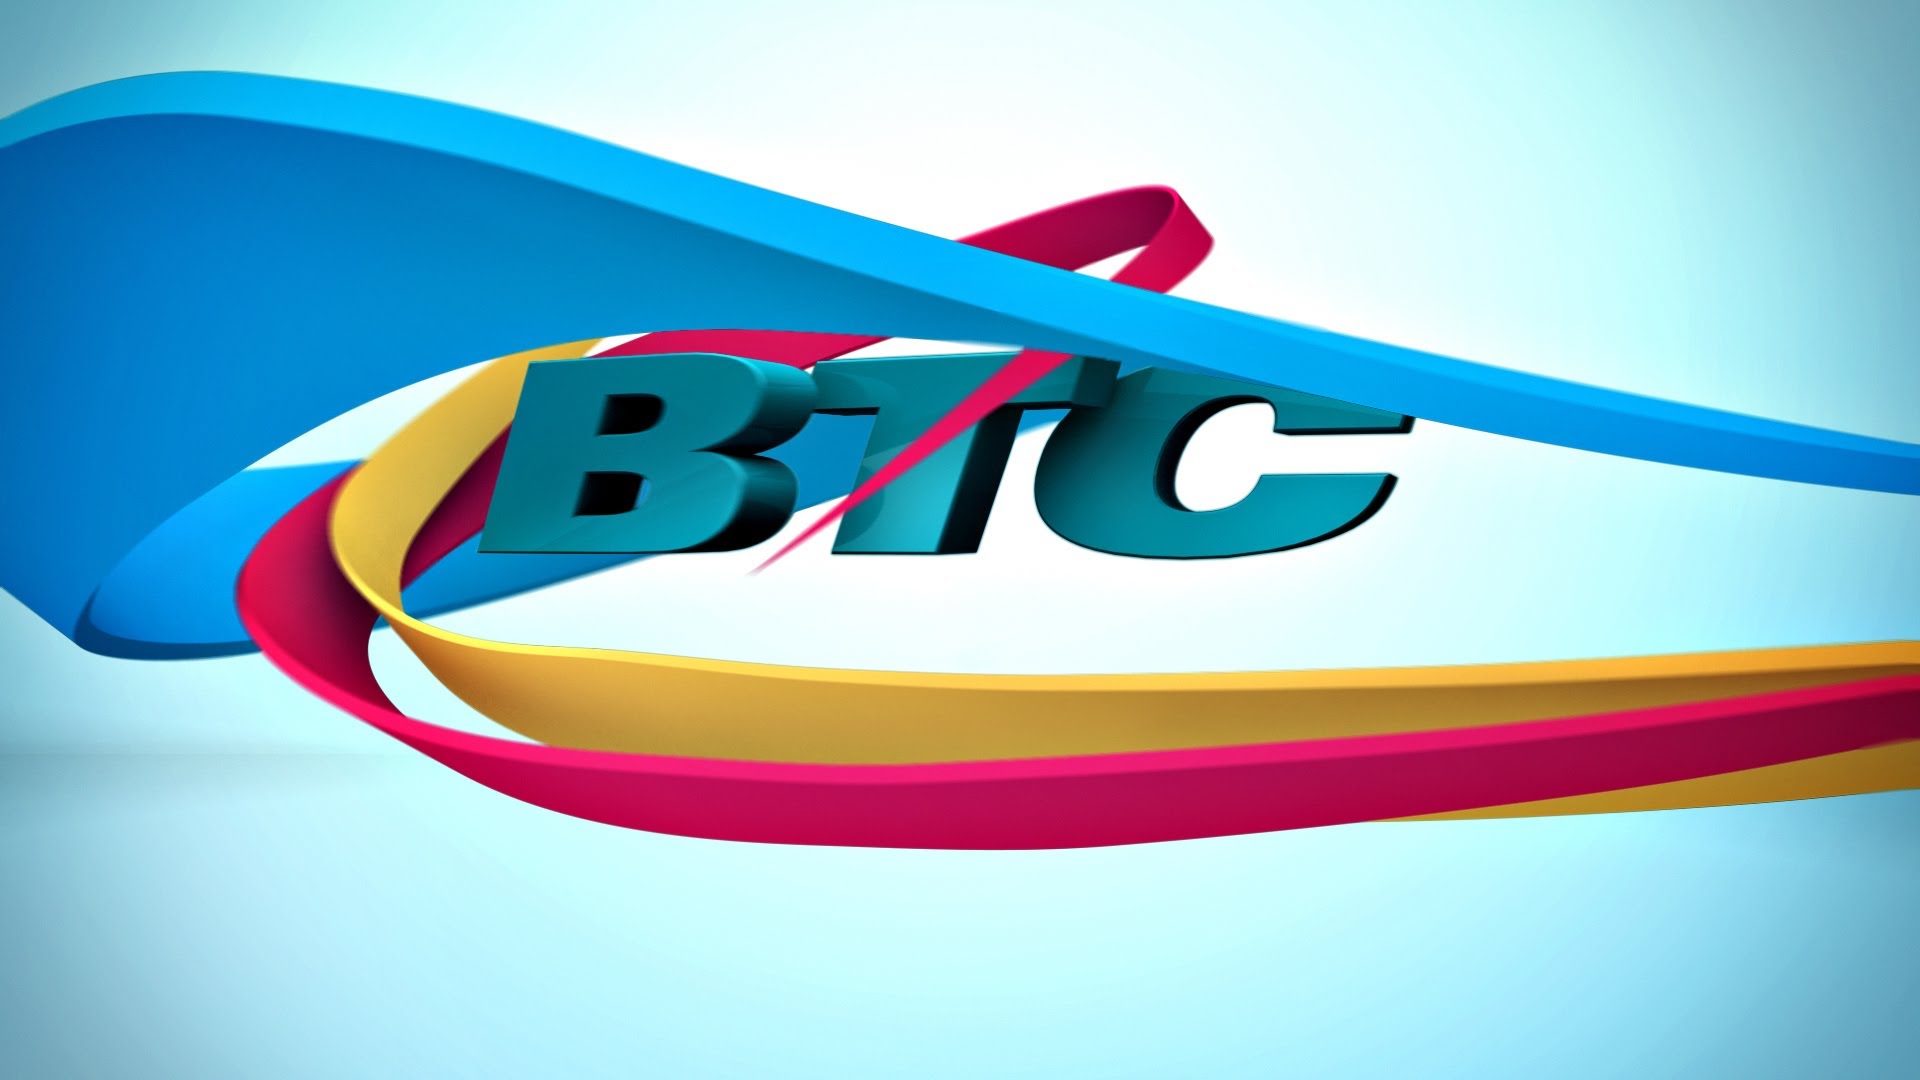 btc bahamas telephone contact